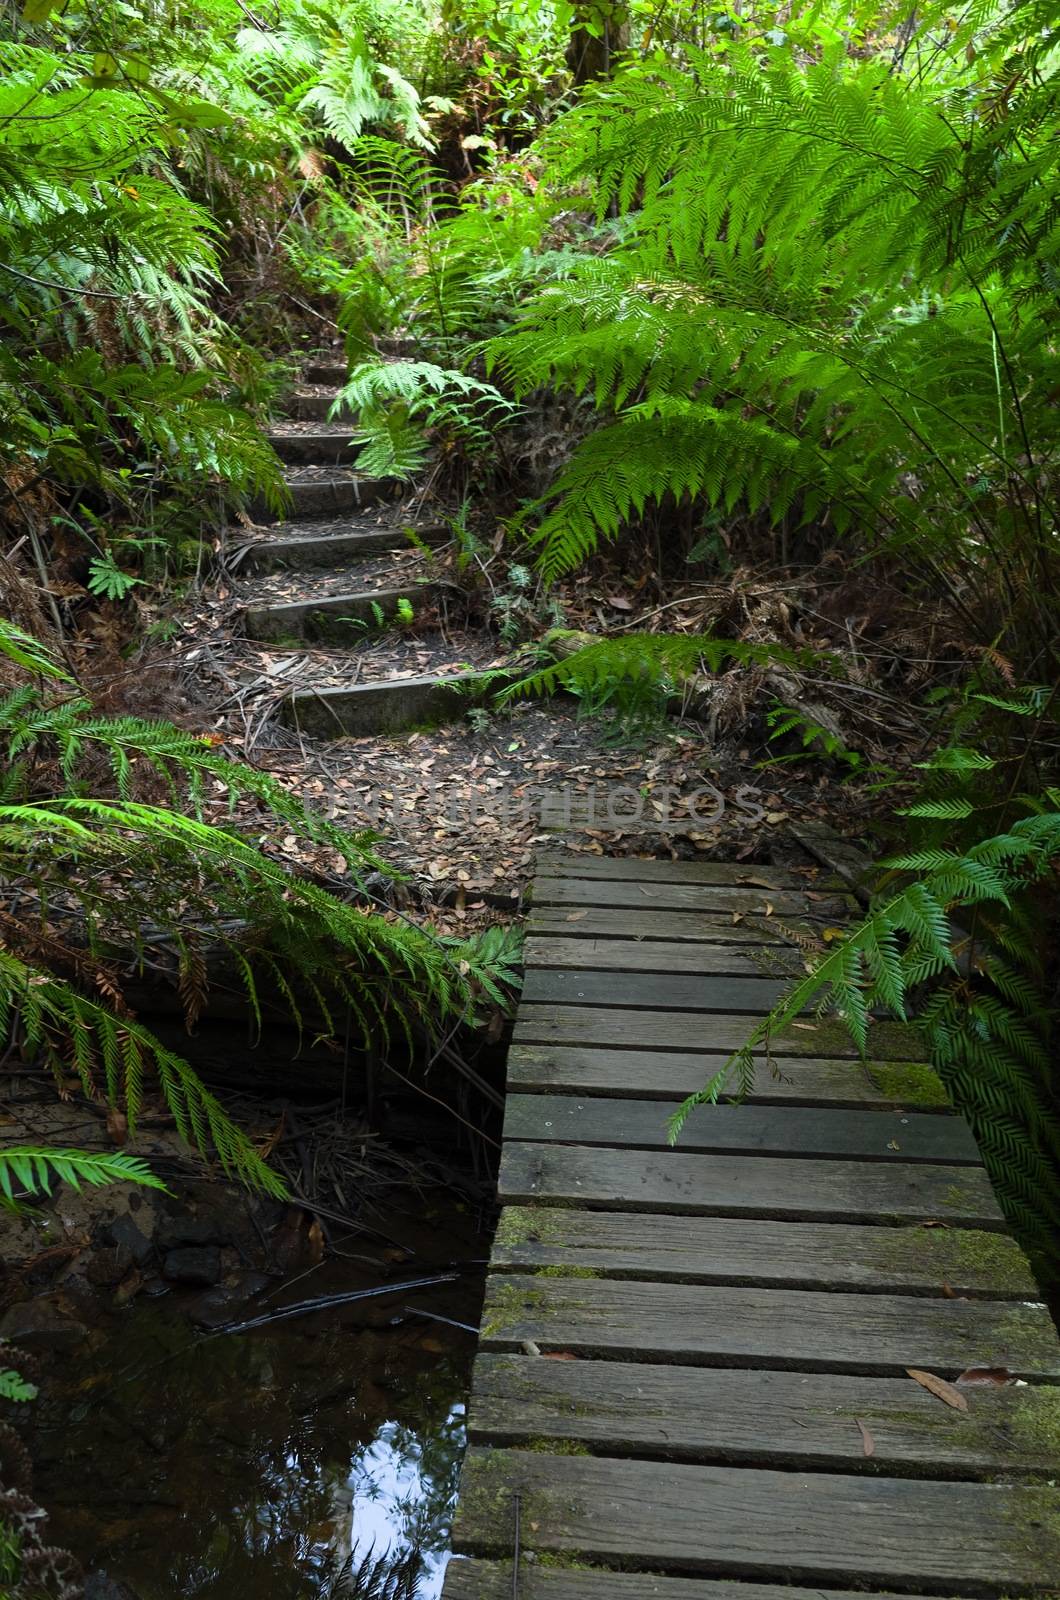 Mossy wooden bridge over ditch in rainforest by jaaske